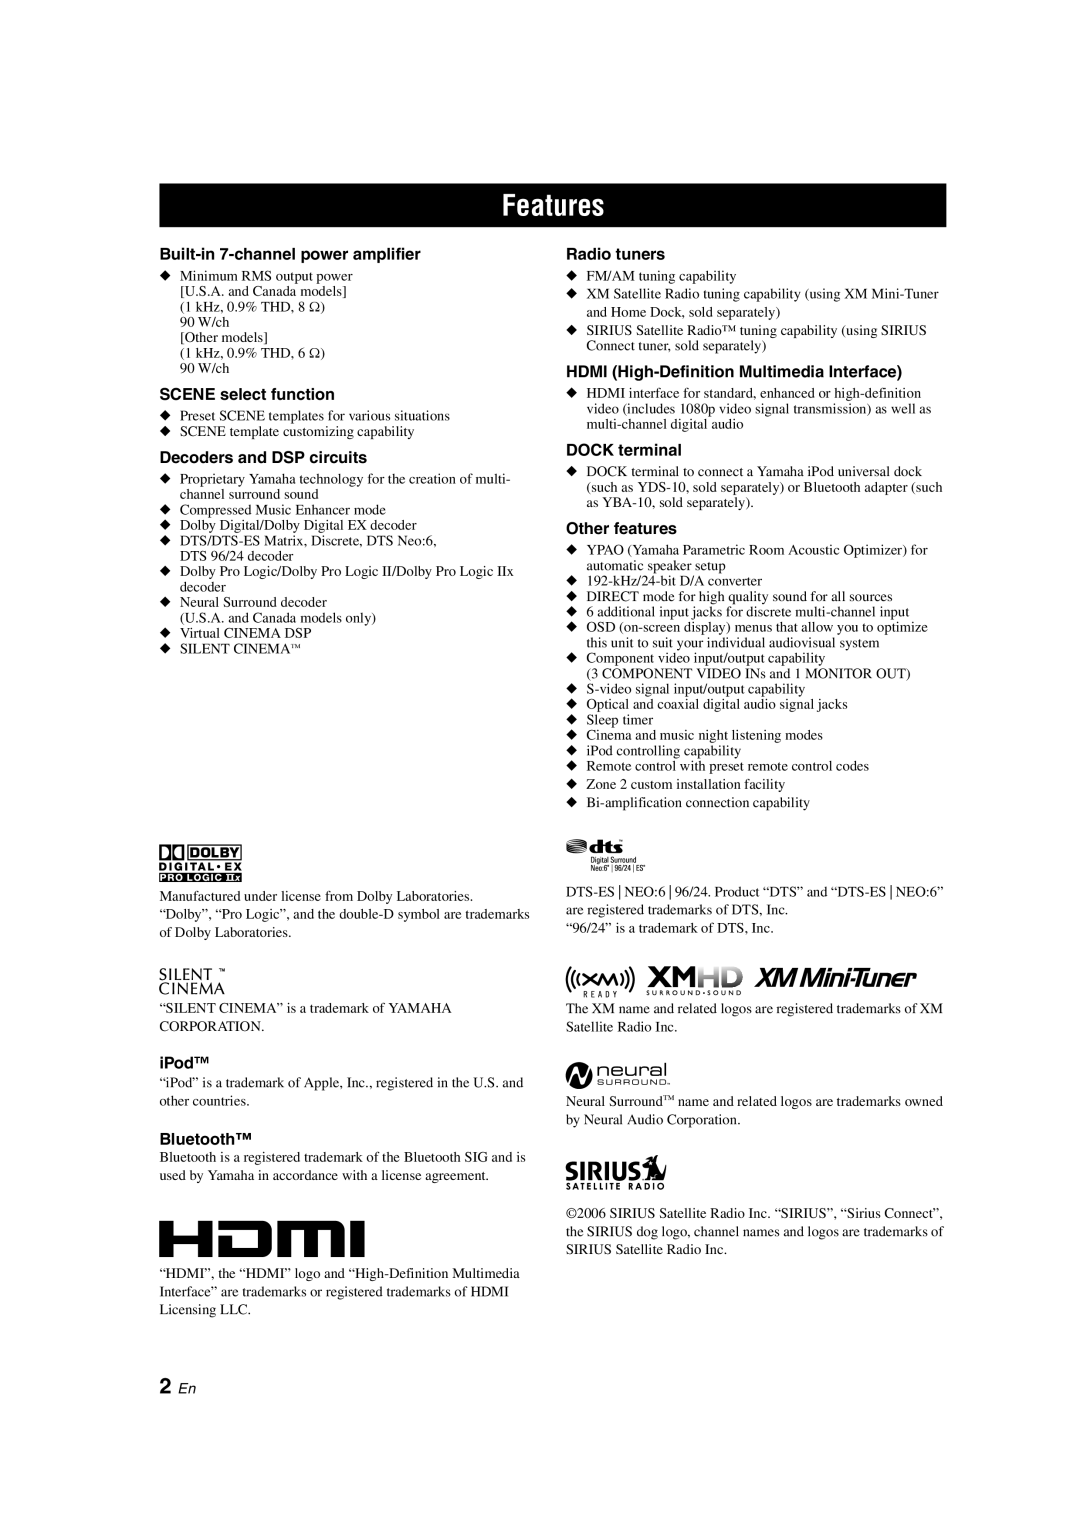 Yamaha HTR-6150 owner manual Features, 2 En 